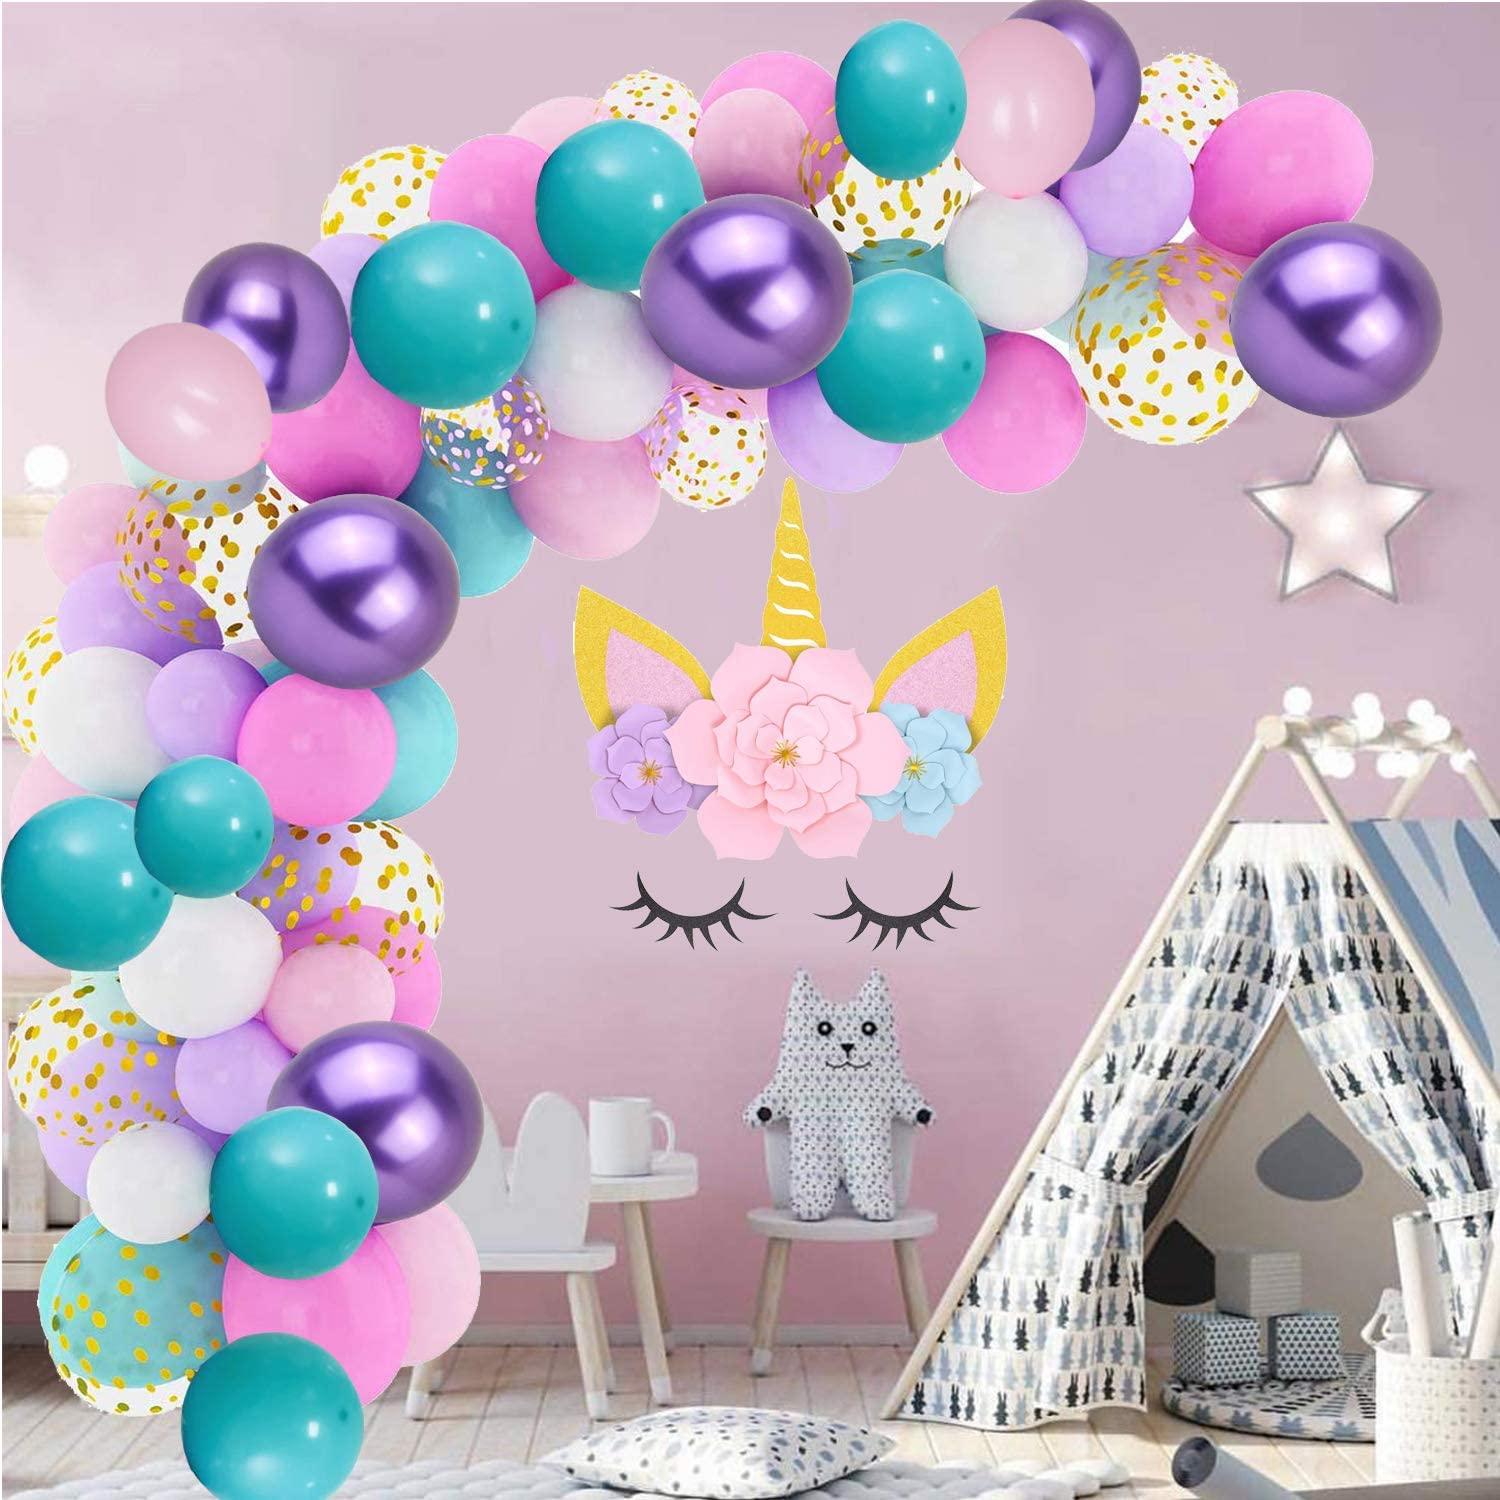 Garland of decorative balloons and its multicolored unicorn - Unicorn